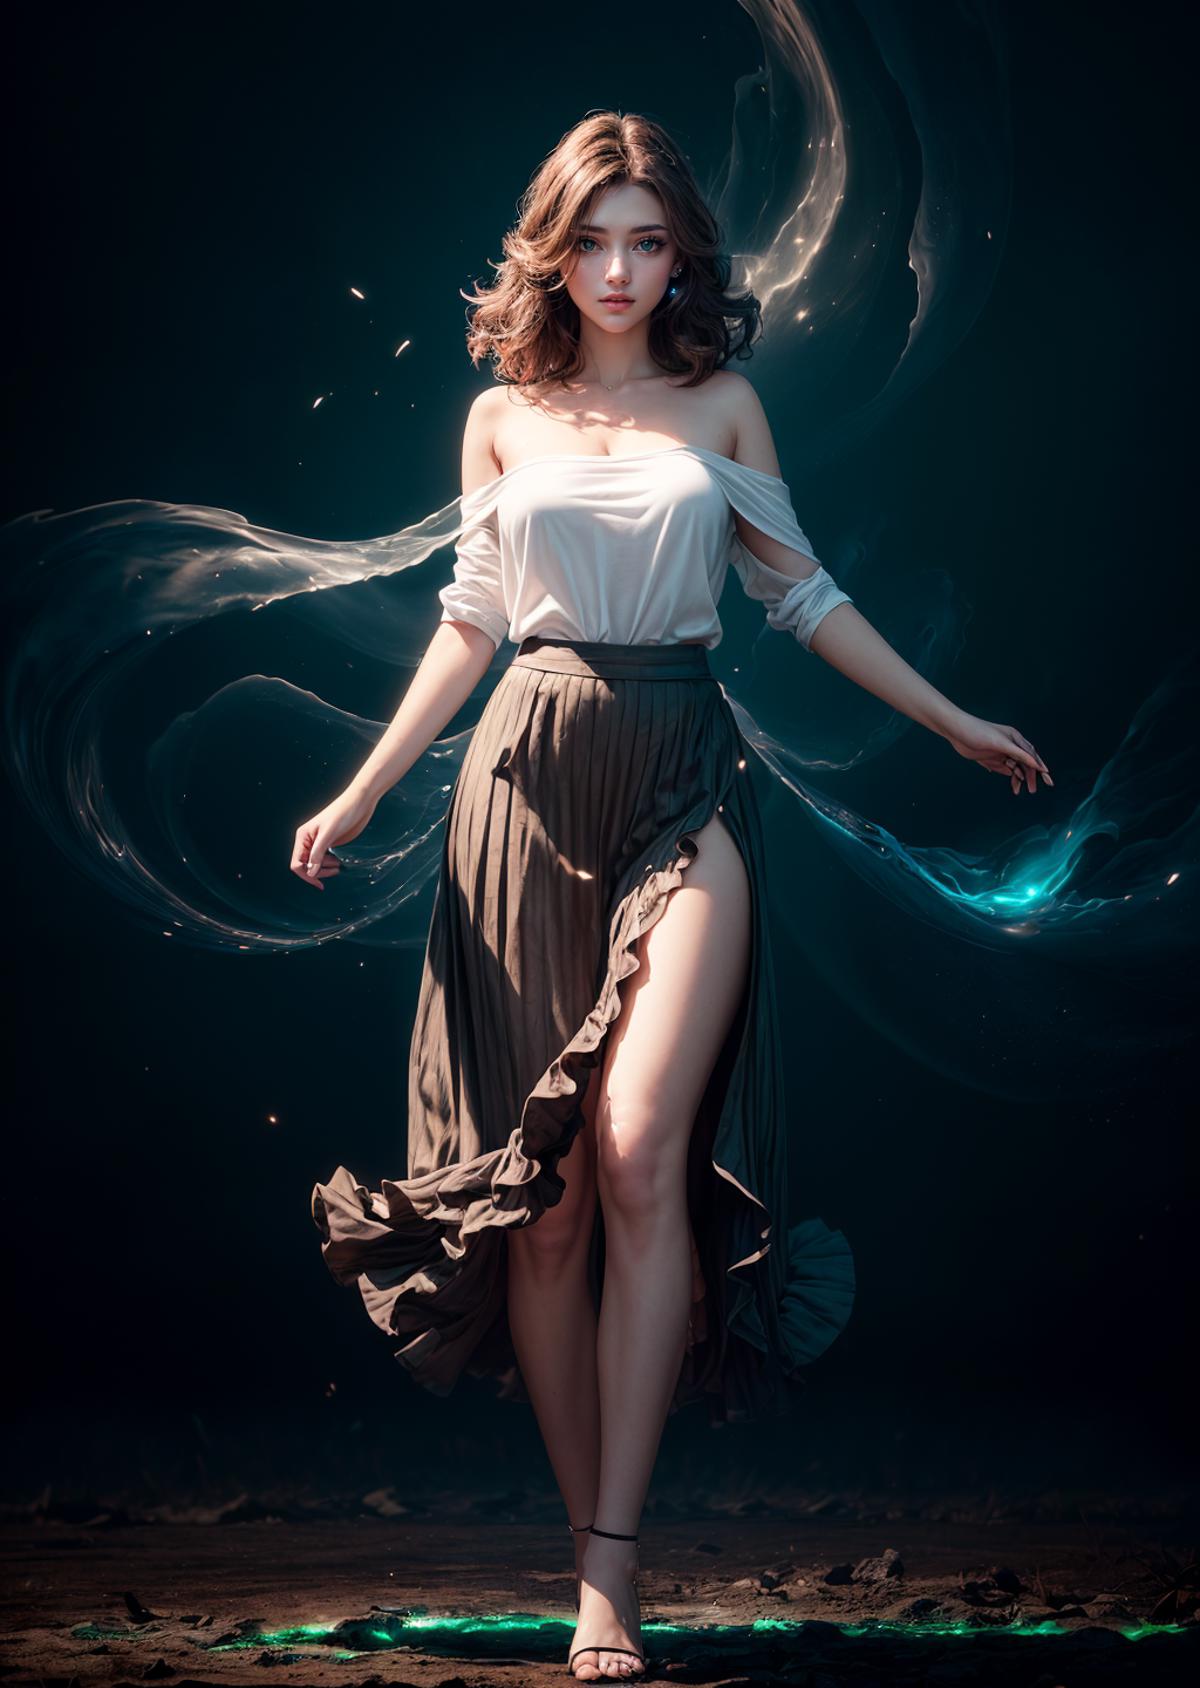 Style Swirl Magic image by 7whitefire7